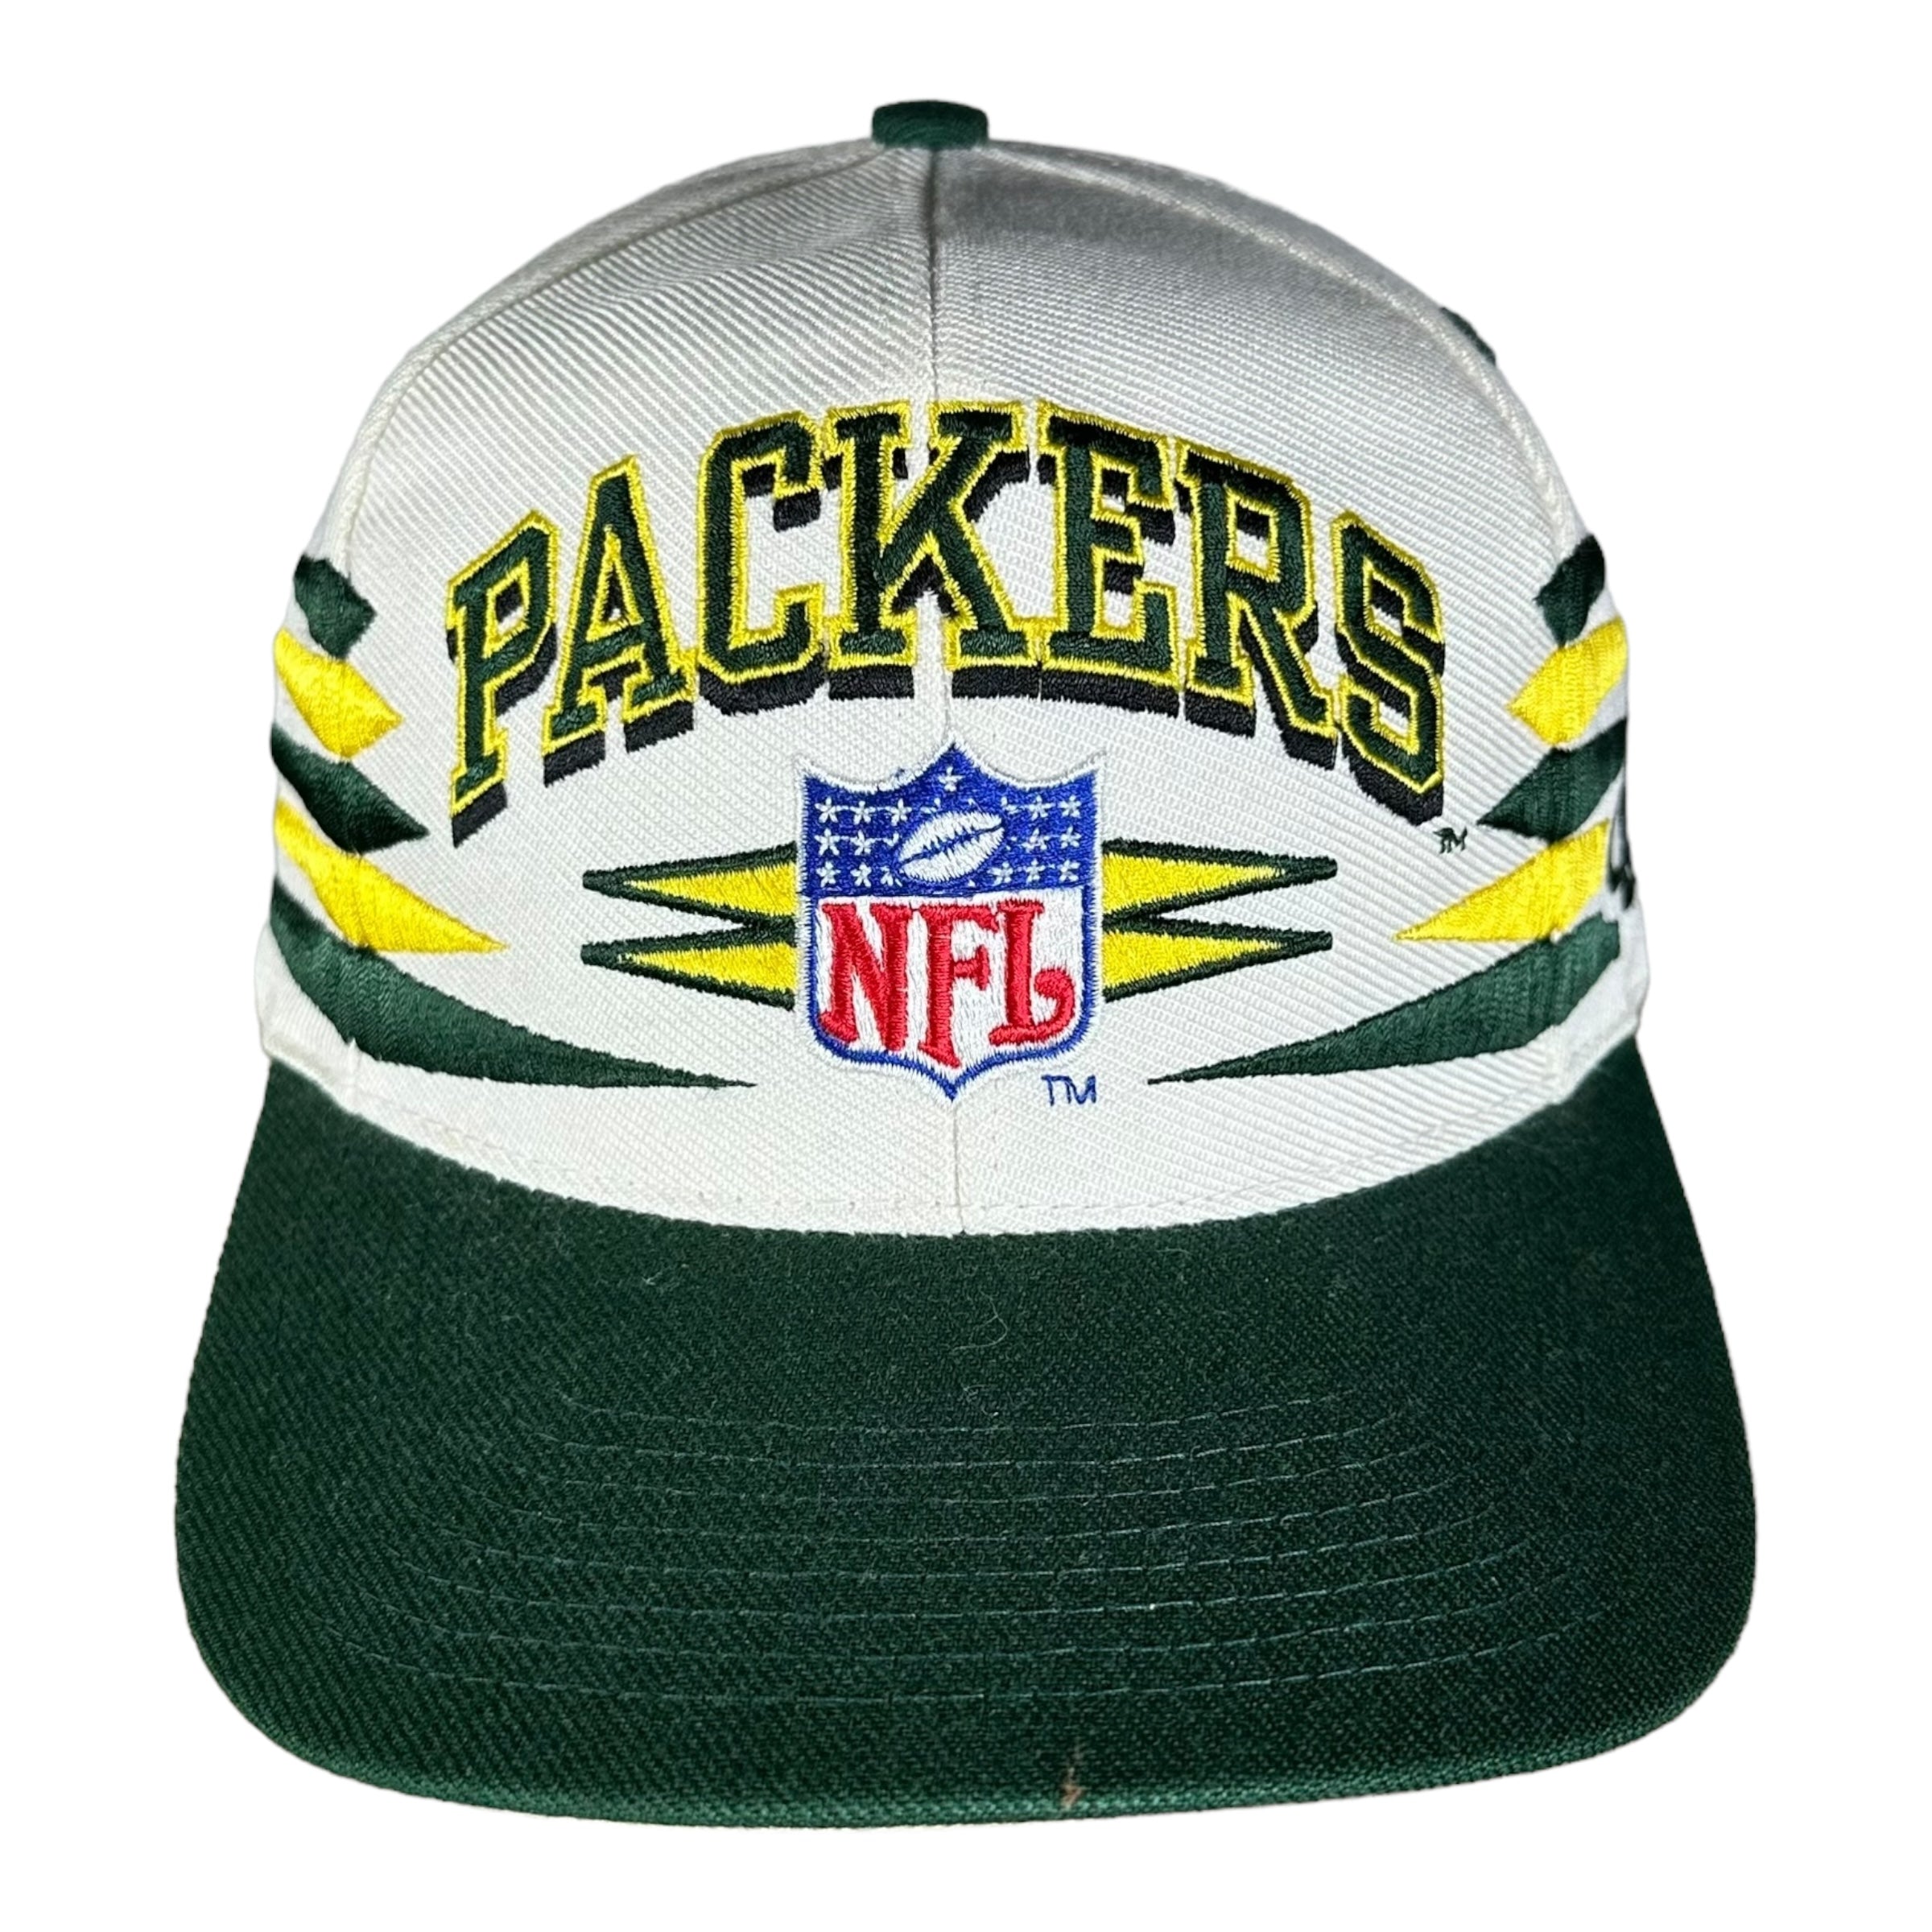 Vintage NWT NFL Green Bay Packers Snapback Hat